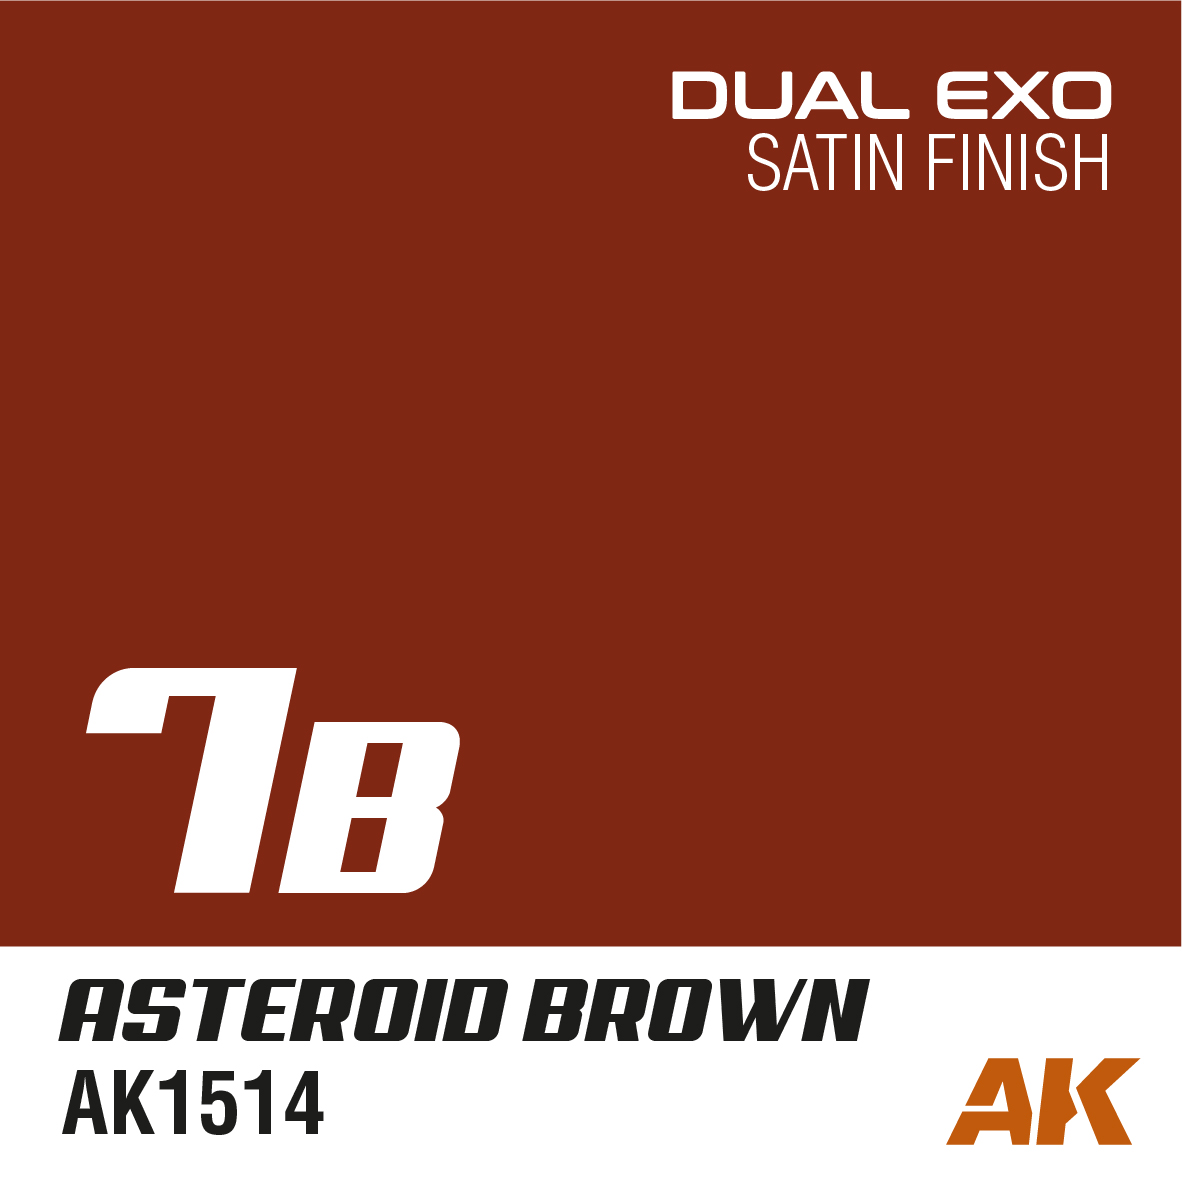 Dual Exo 7B - Asteroid Brown